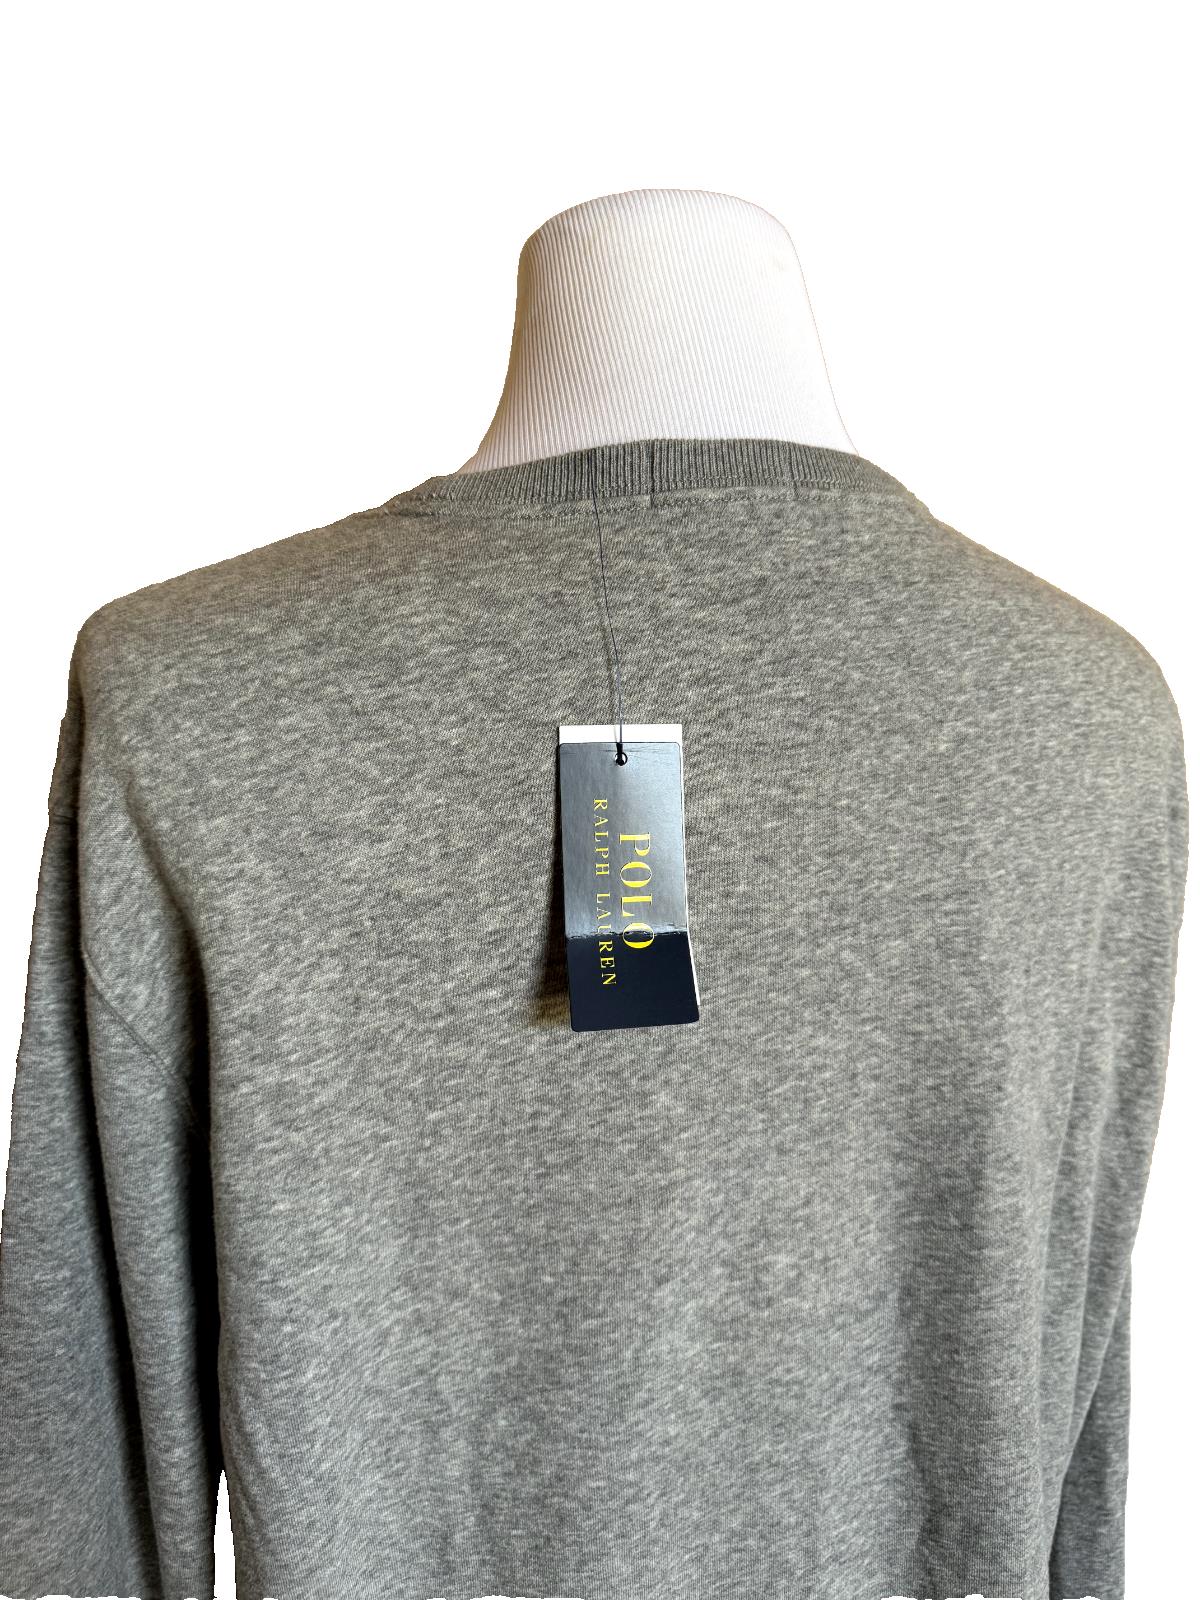 NWT $168 Polo Ralph Lauren Long Sleeve Fleece Bear Sweatshirt Gray 2XL